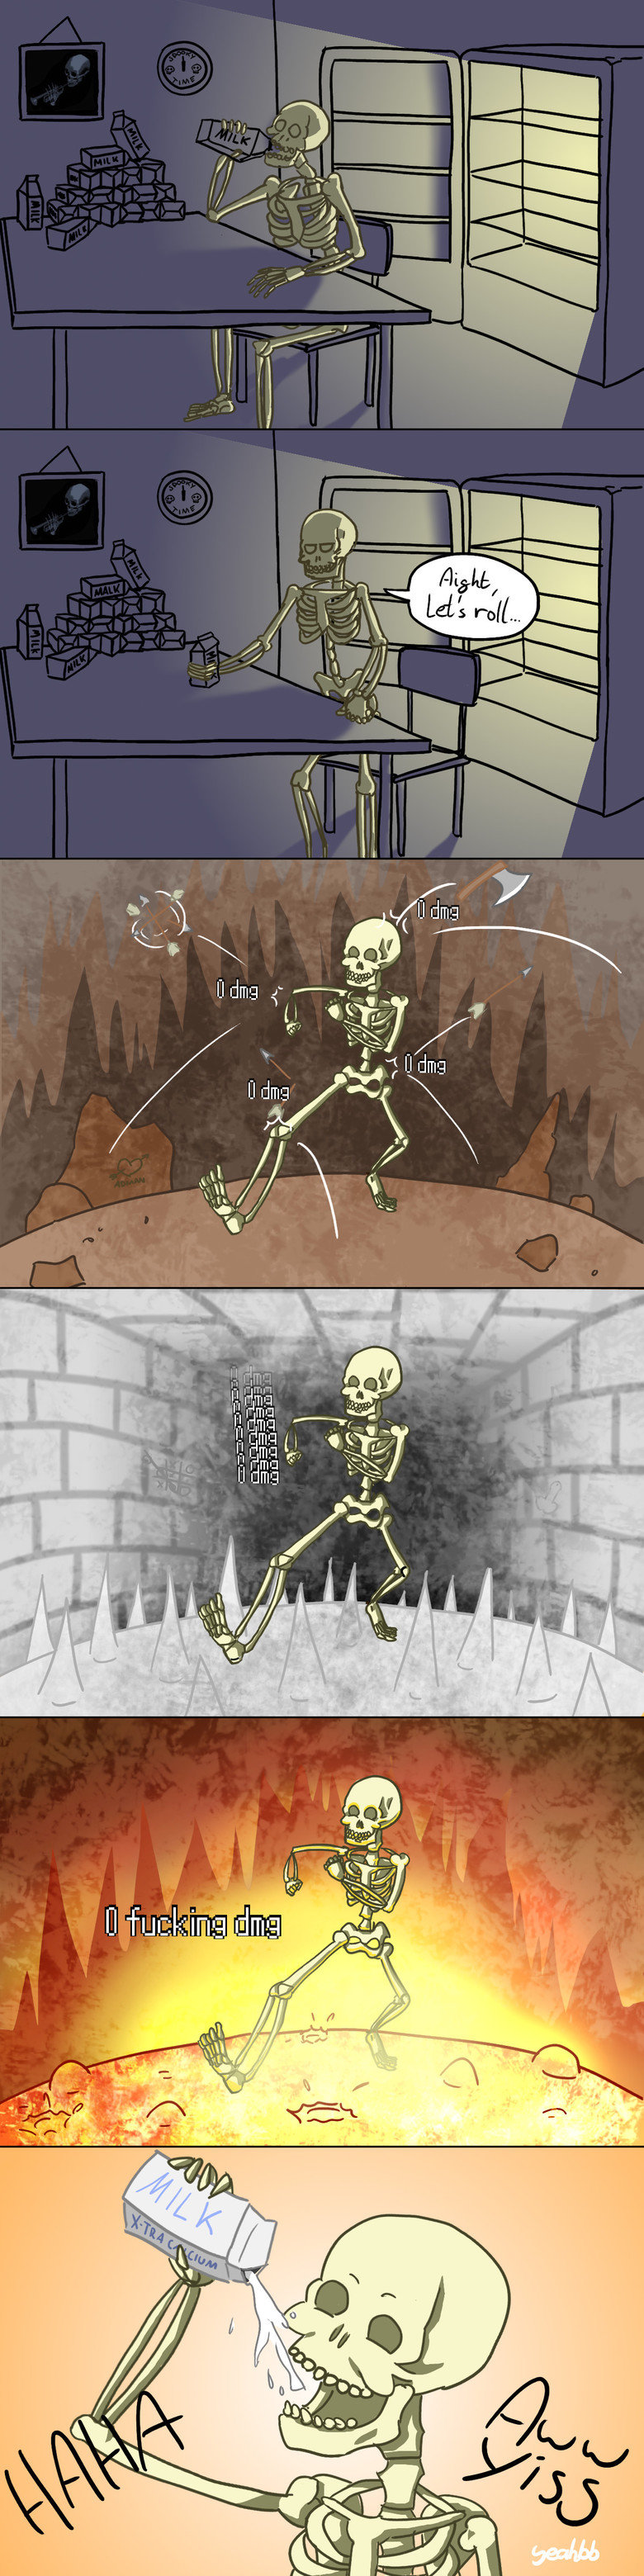 tumblr - skeleton milk comic